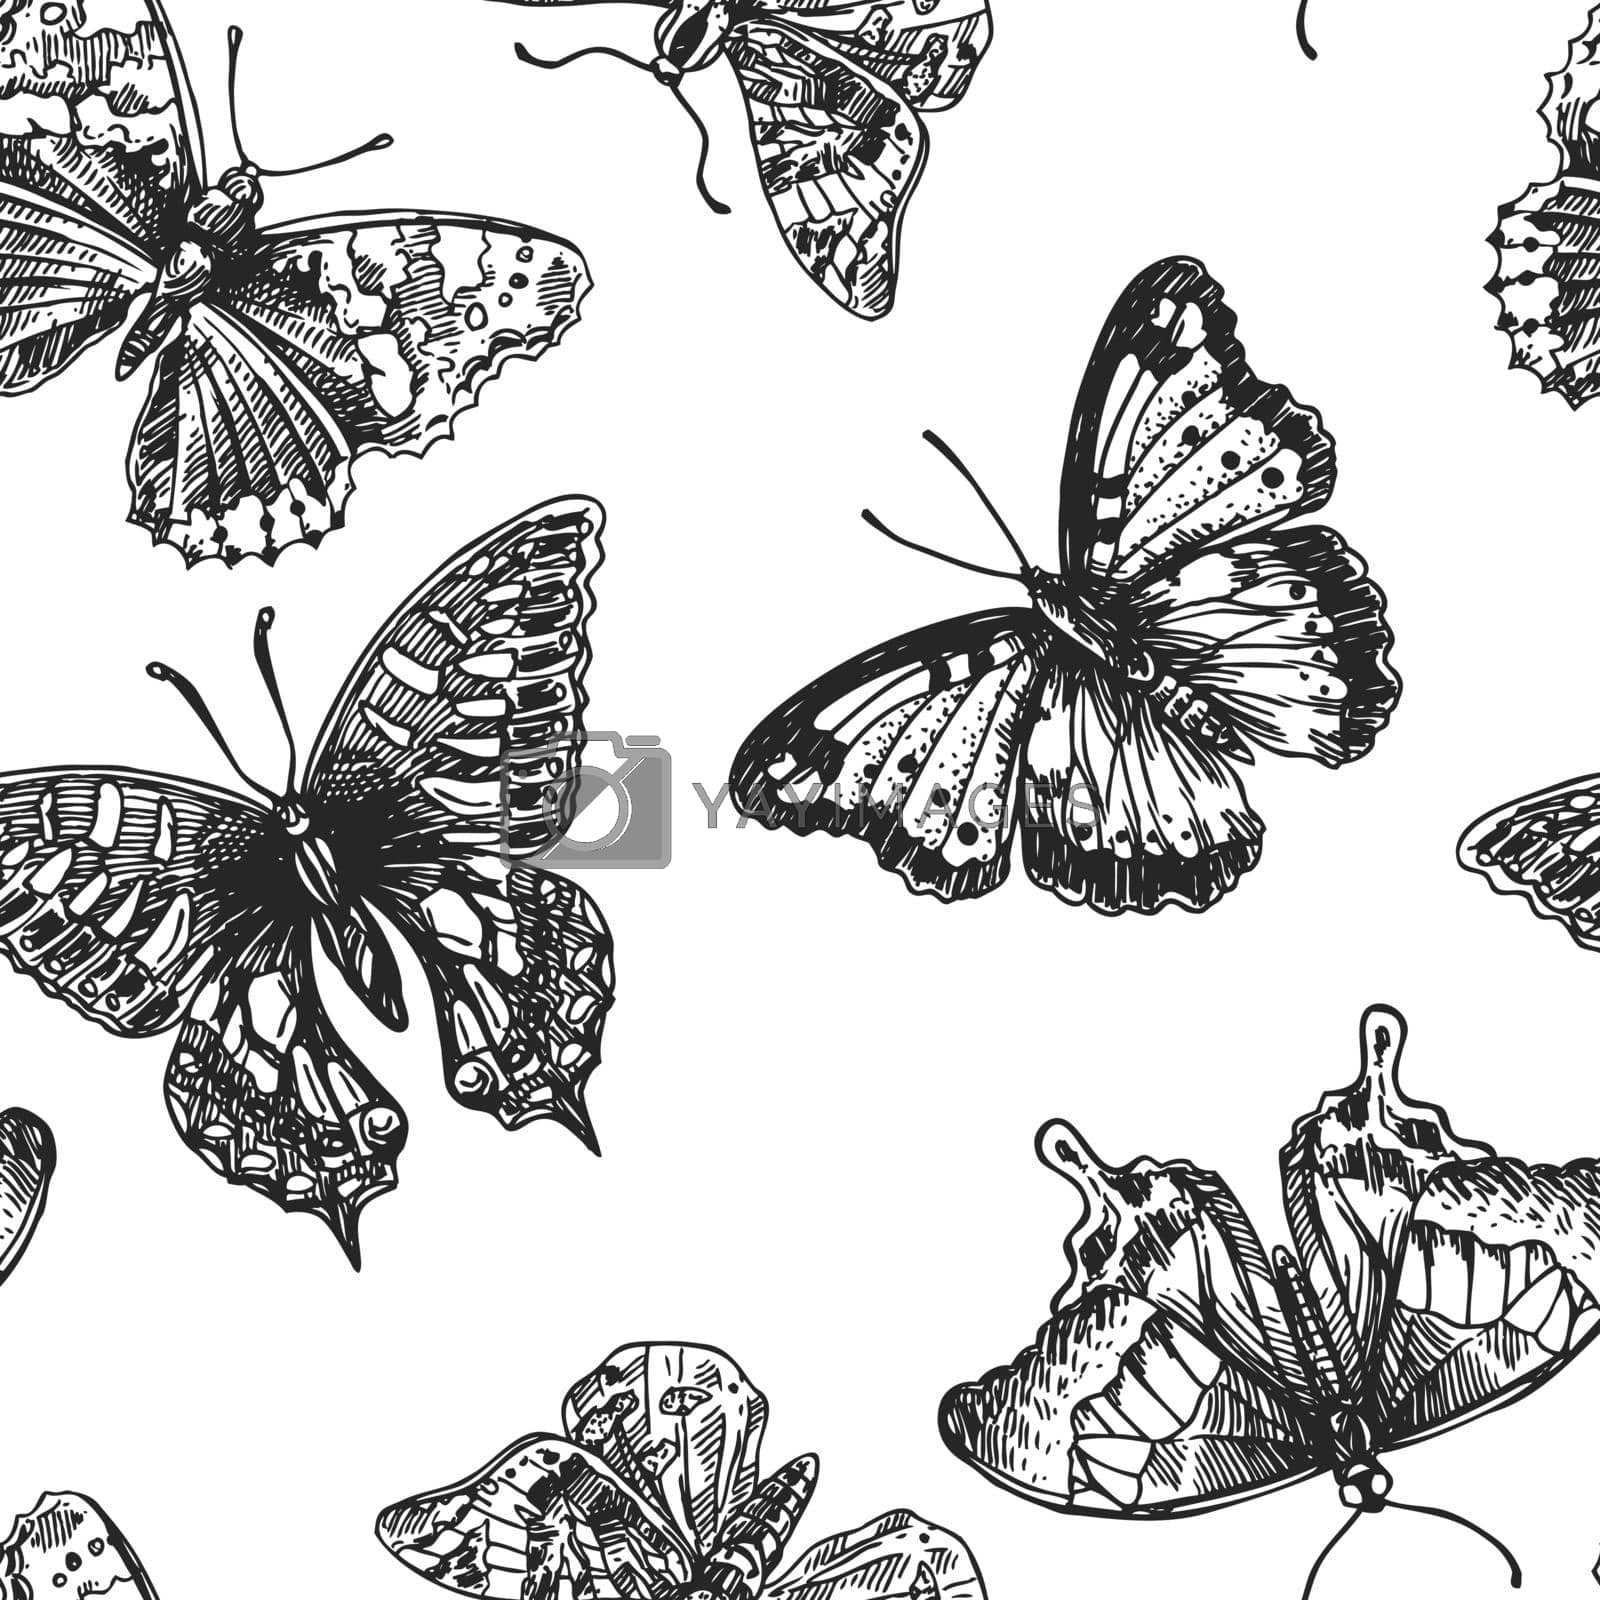 Royalty free image of hand drawn butterflies by steshnikova